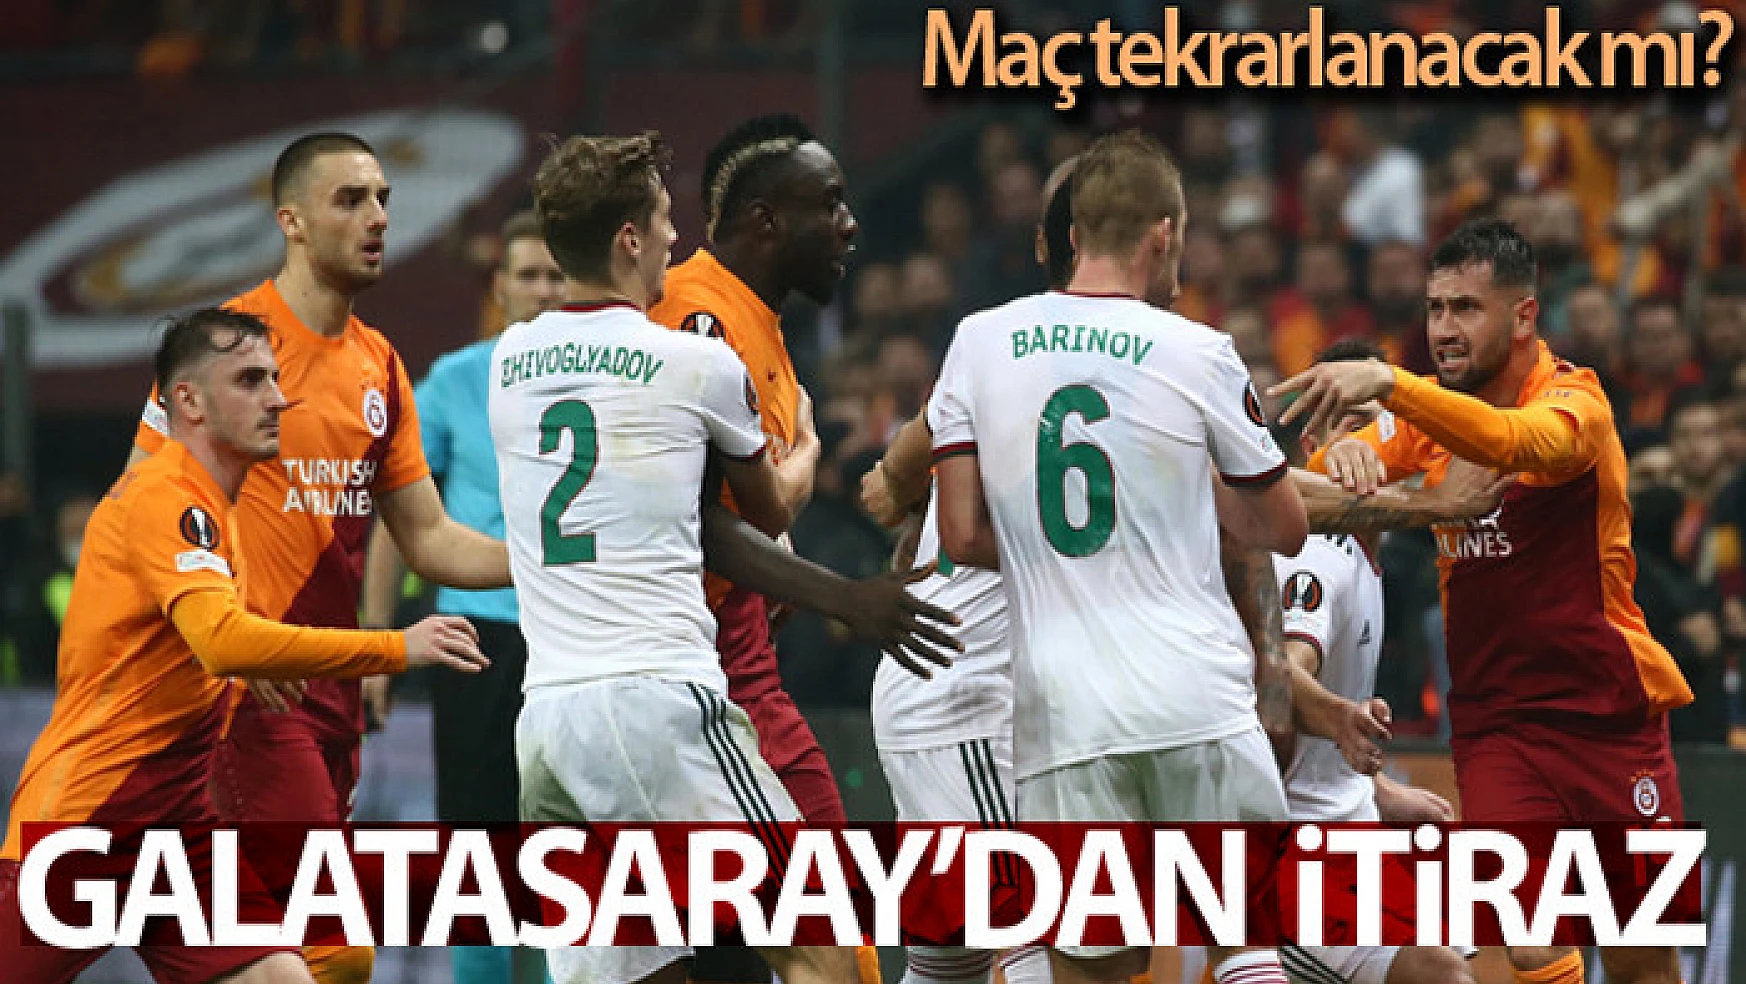 Galatasaray'dan UEFA'ya kural hatası başvurusu